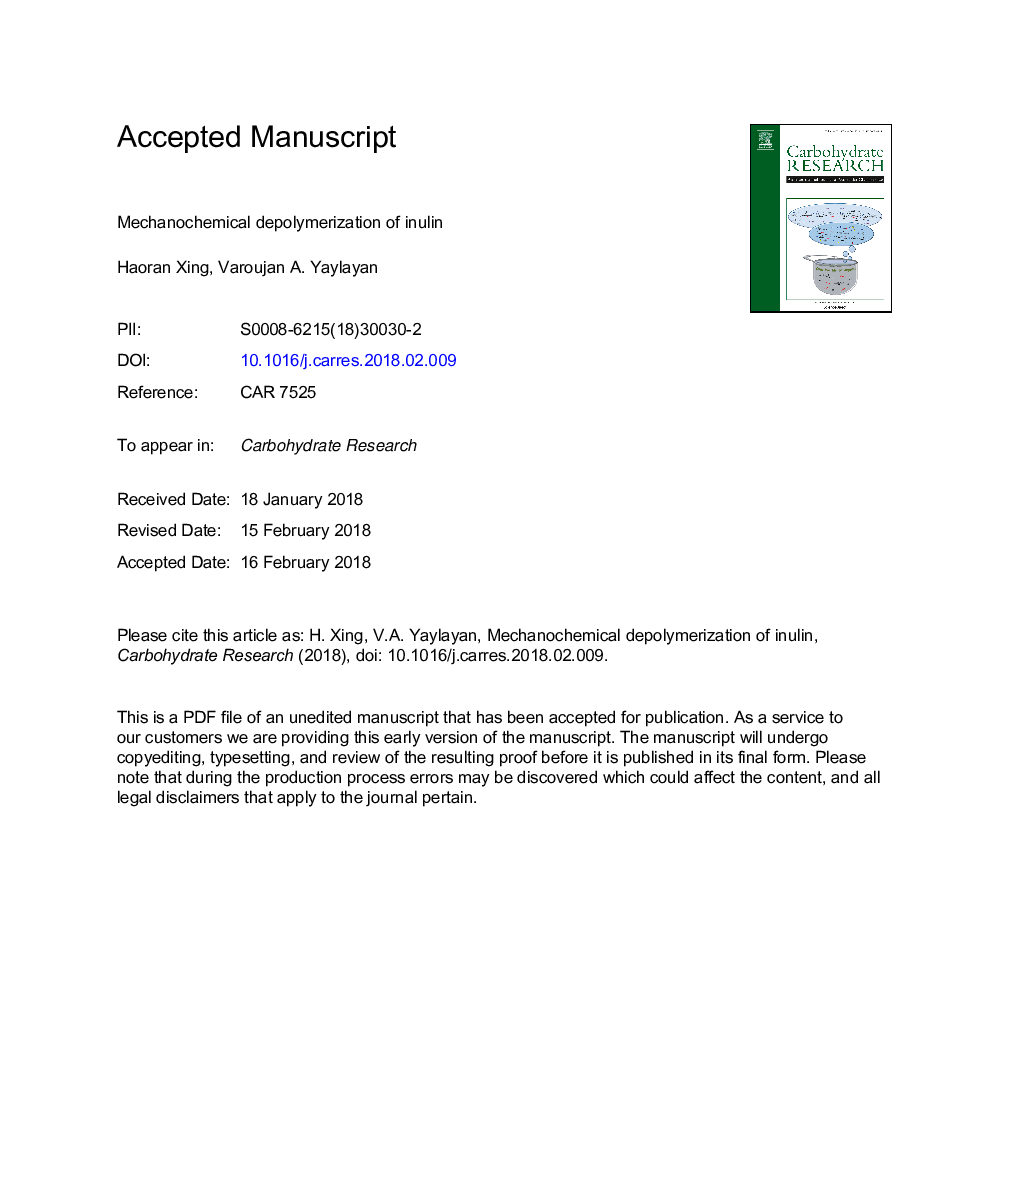 Mechanochemical depolymerization of inulin